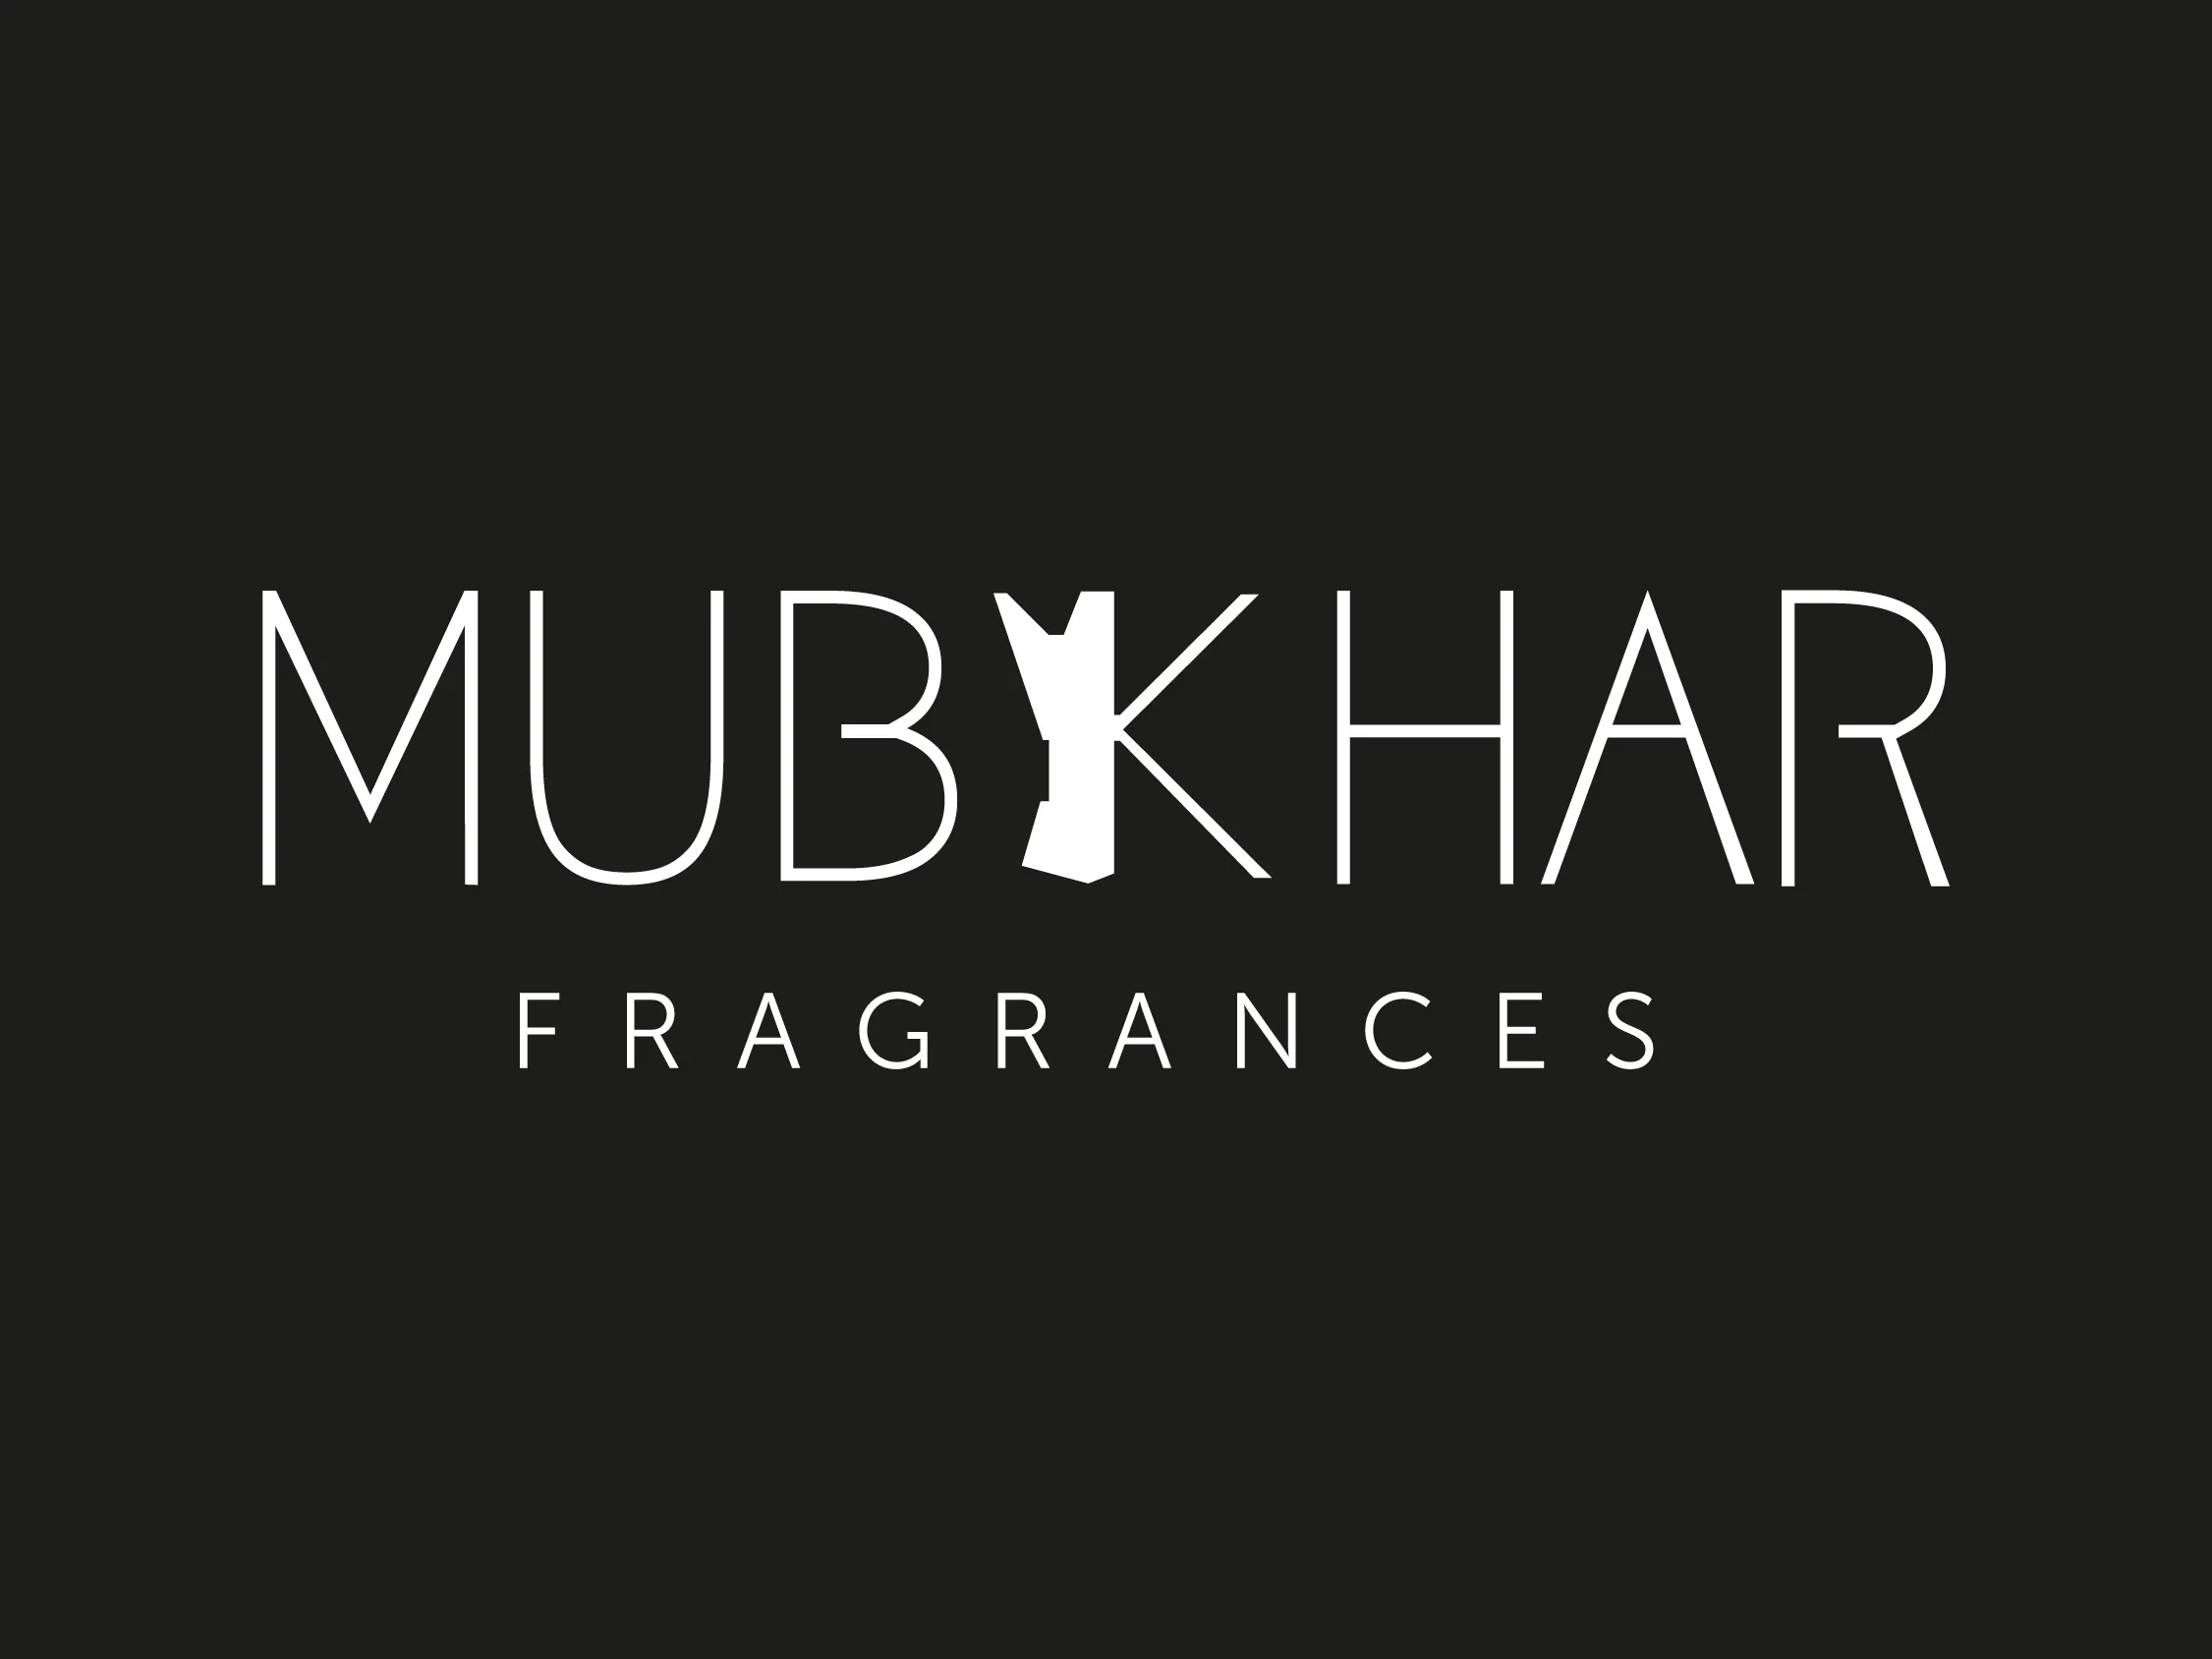 Dazzah Merchants logos-Mubkhar